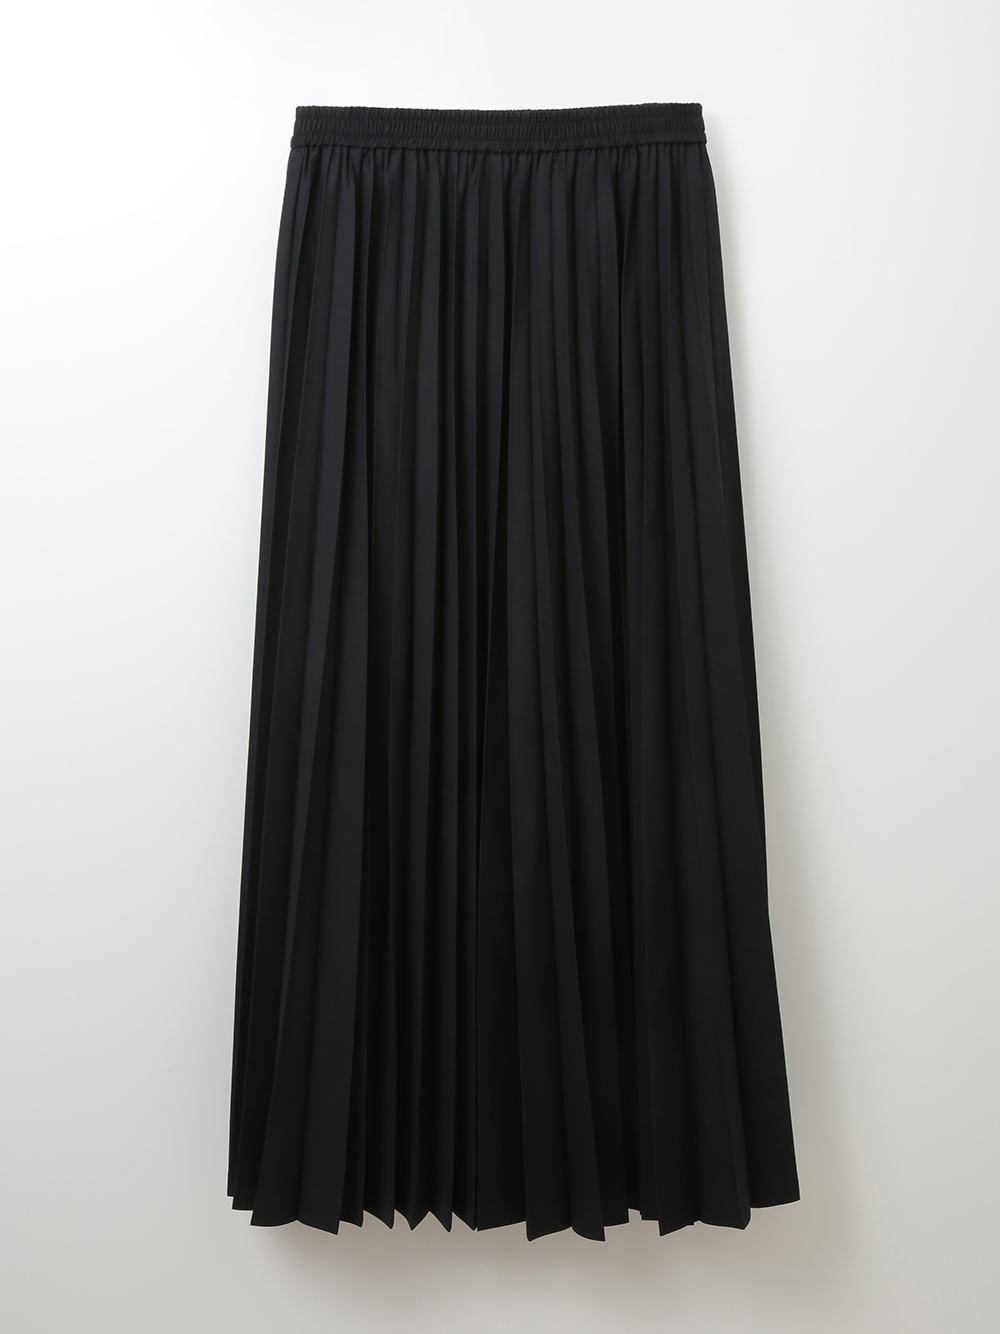 Pleated Skirt(00ブラック-フリー)